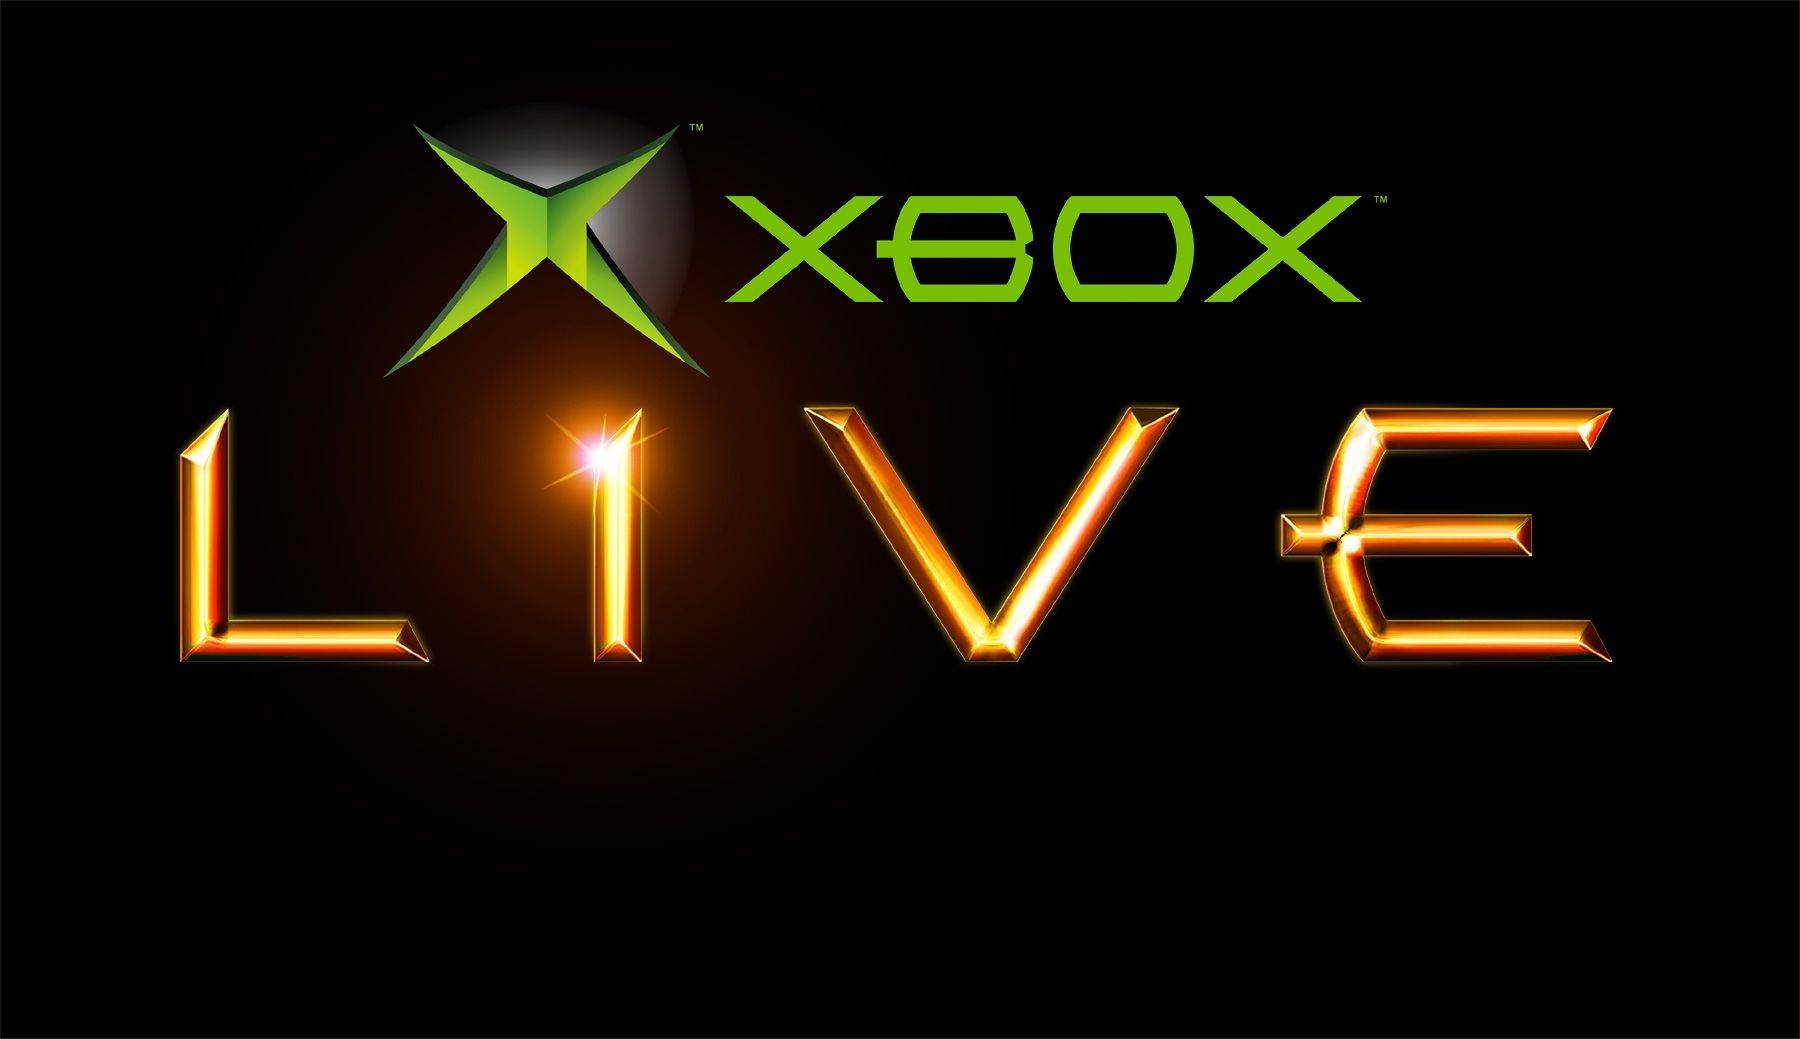 XBOX Live Wallpaper | Free Download f - Xbox Live Wallpaper